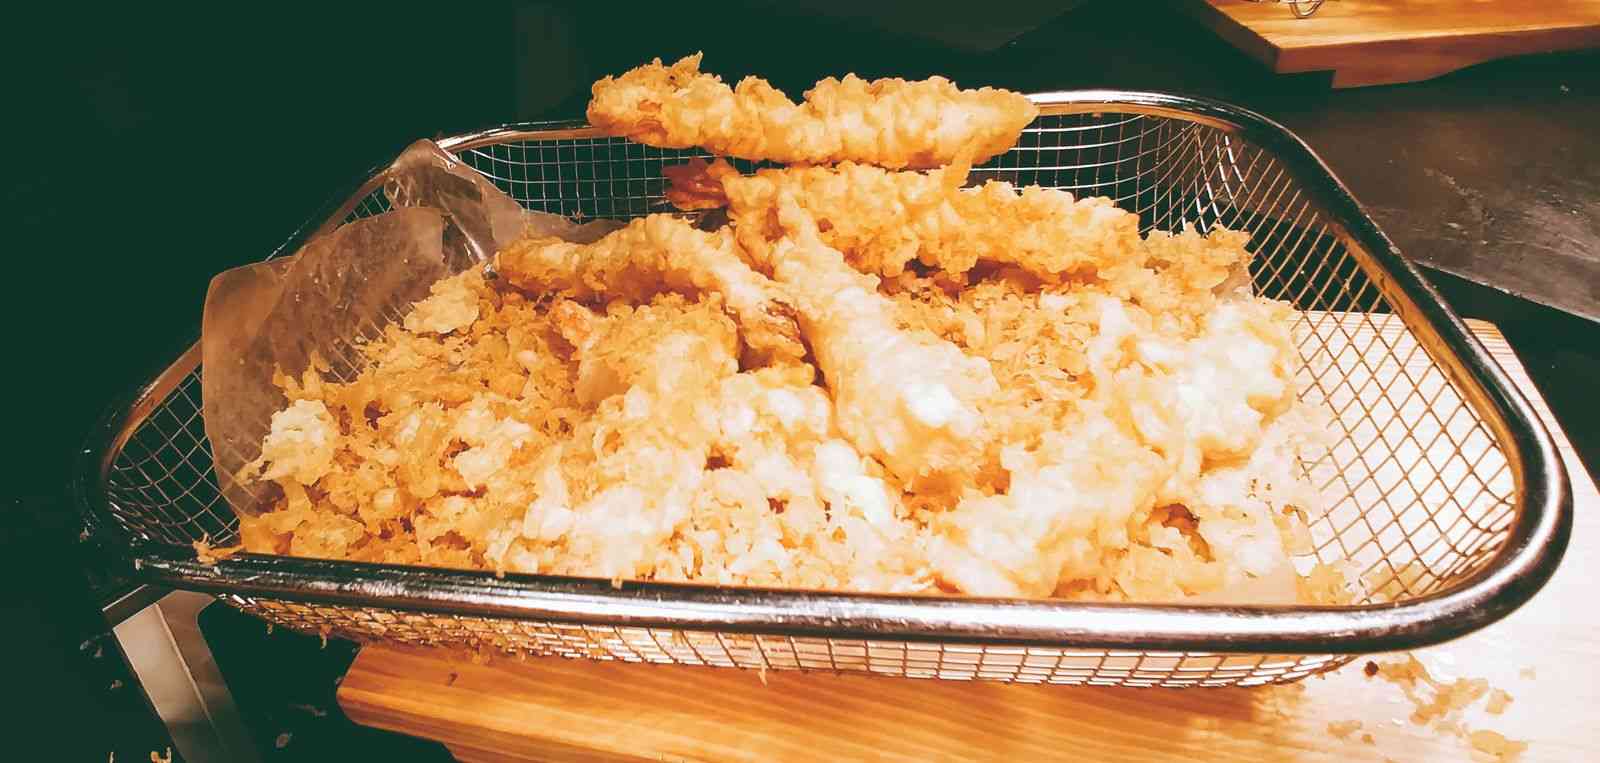 Vikings Luxury Buffet: ebi tempura at the Japanese food station